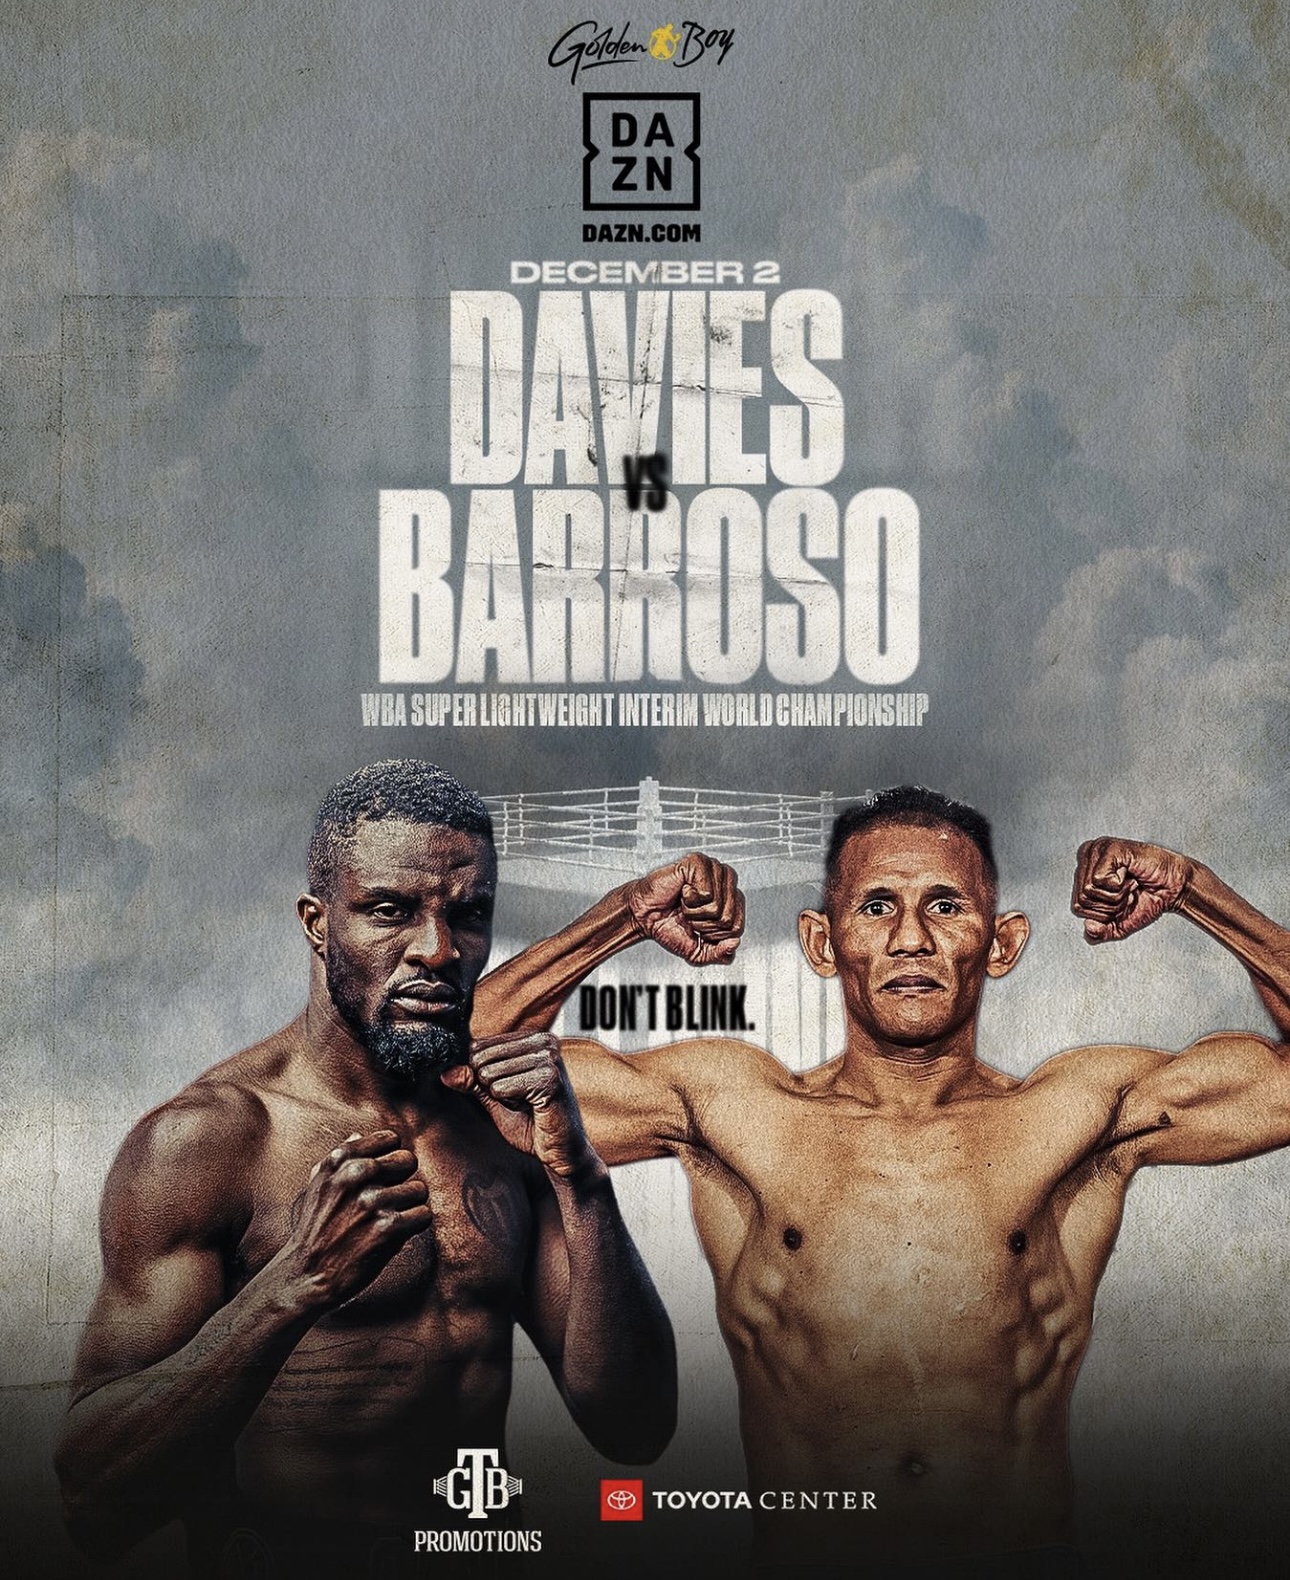 Davies-Barroso will fight on Dec. 2 